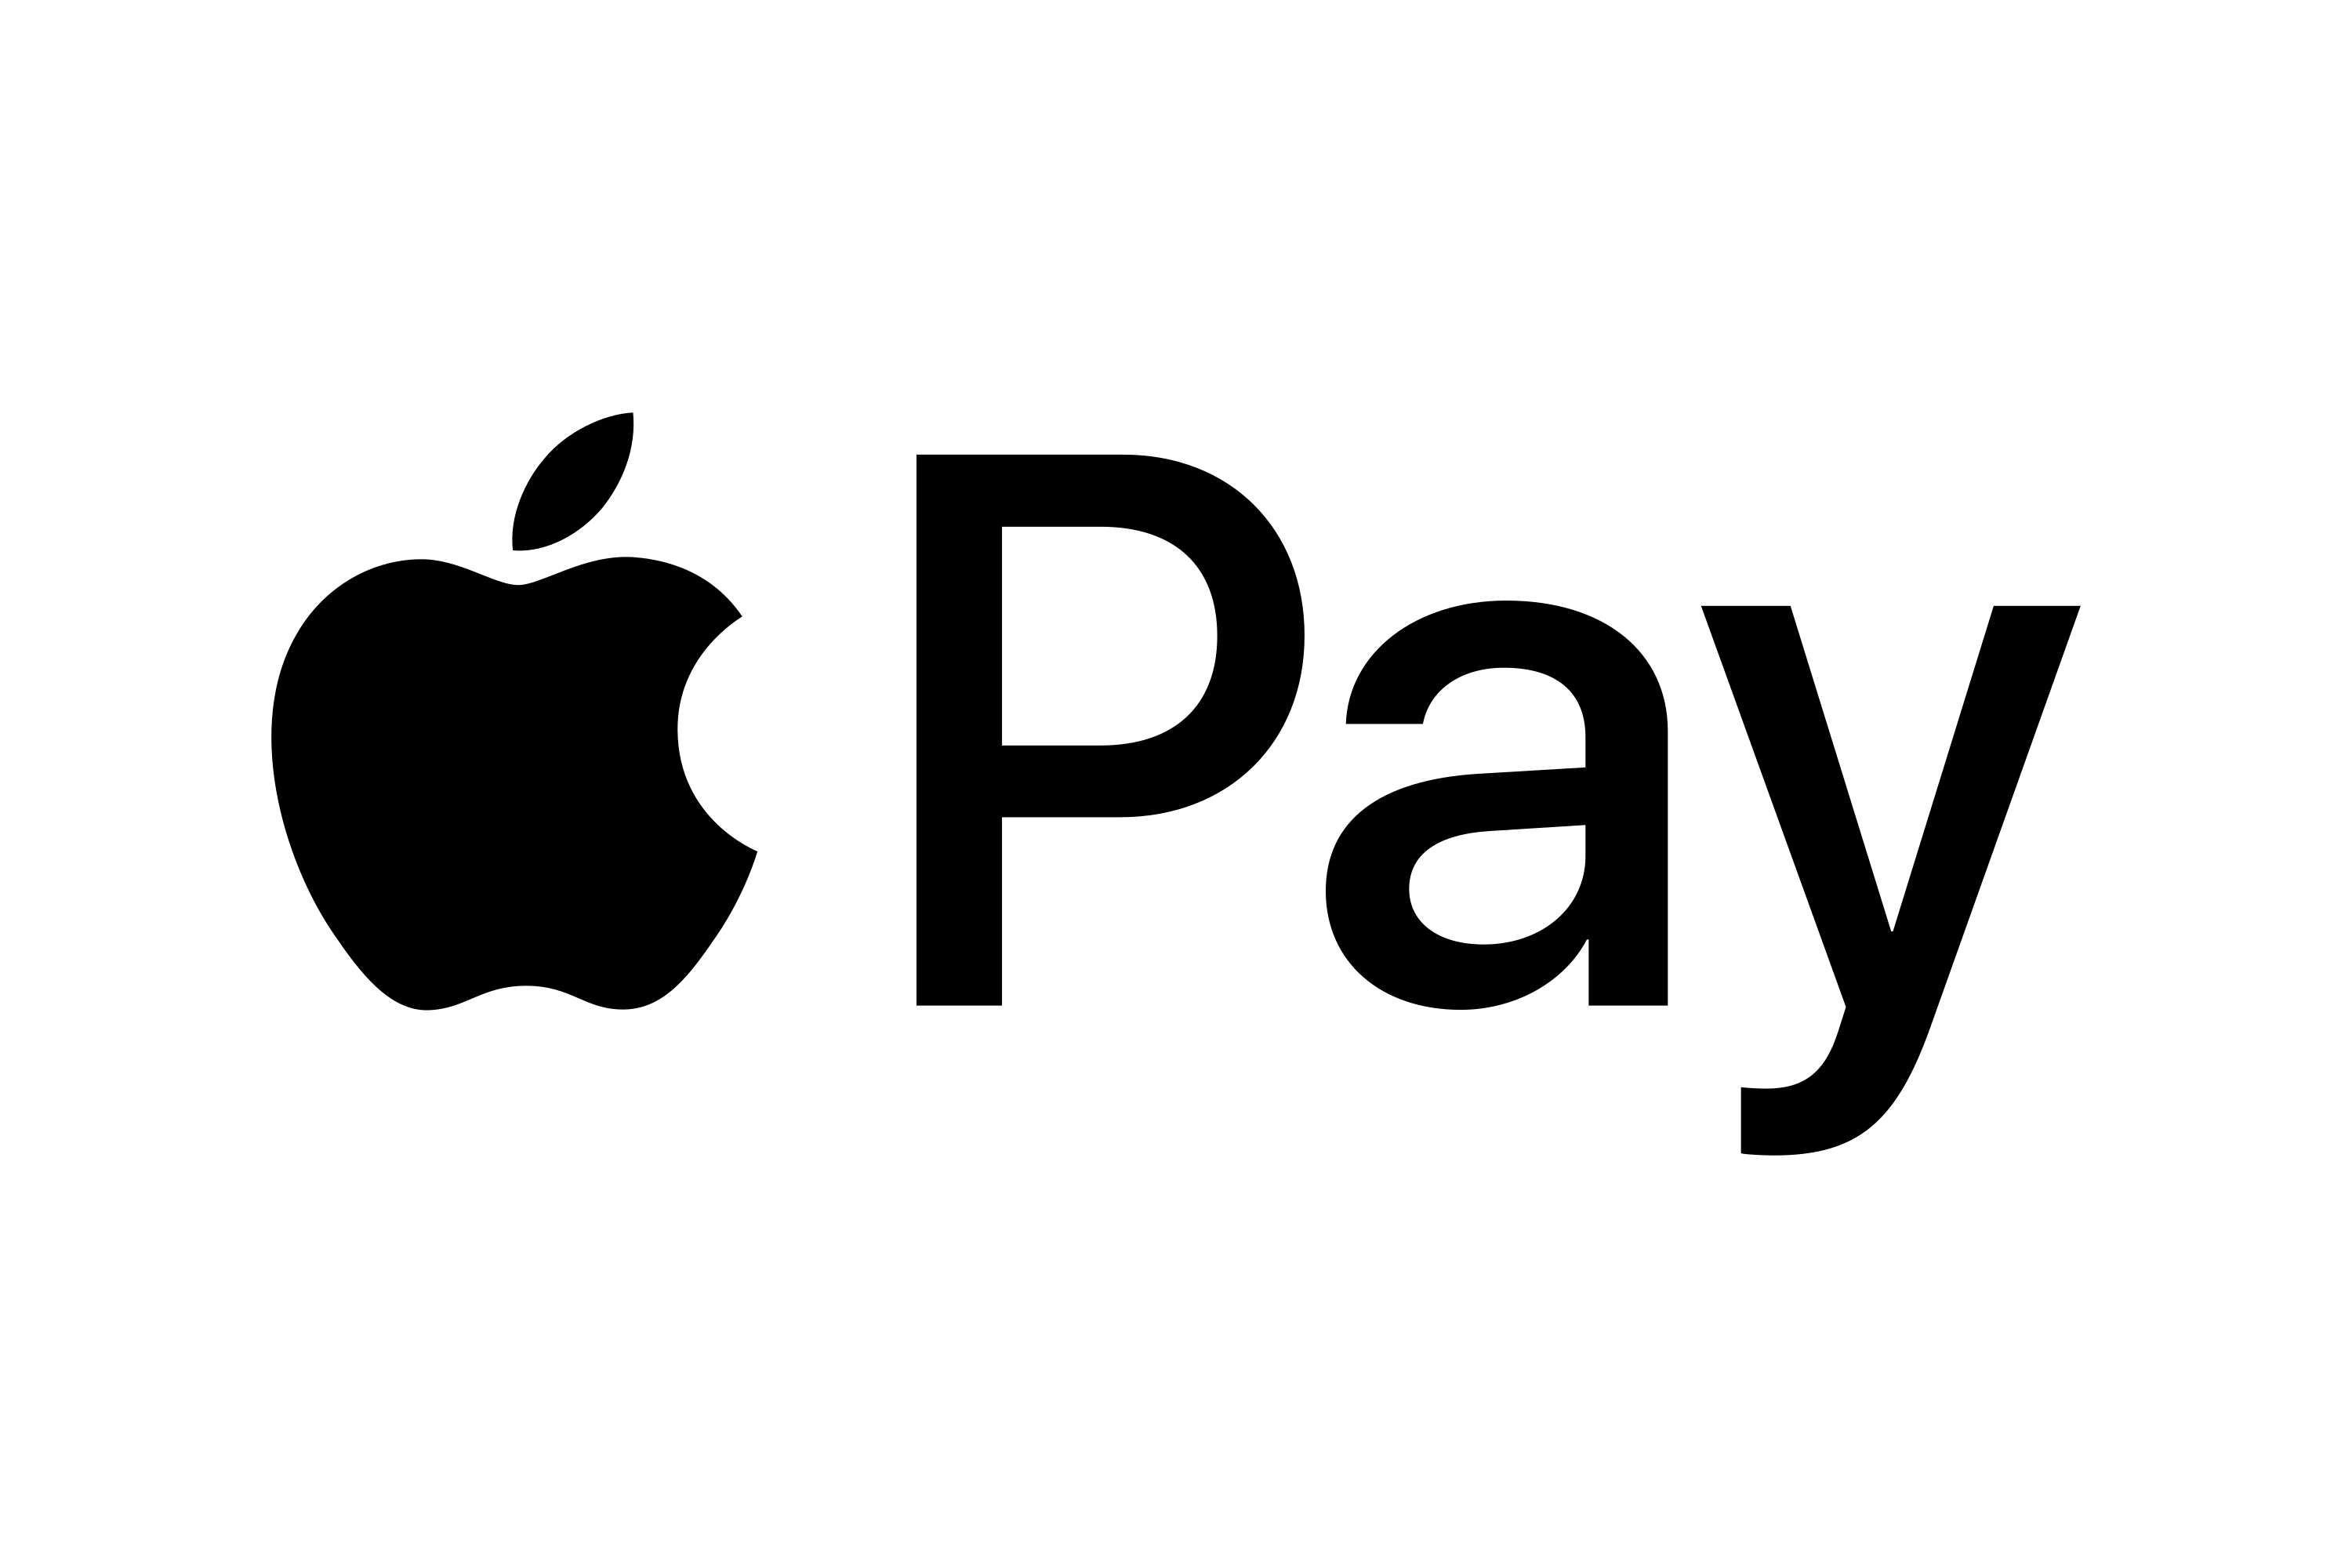 Download Apple Pay Logo in SVG Vector or PNG File Format - Logo.wine